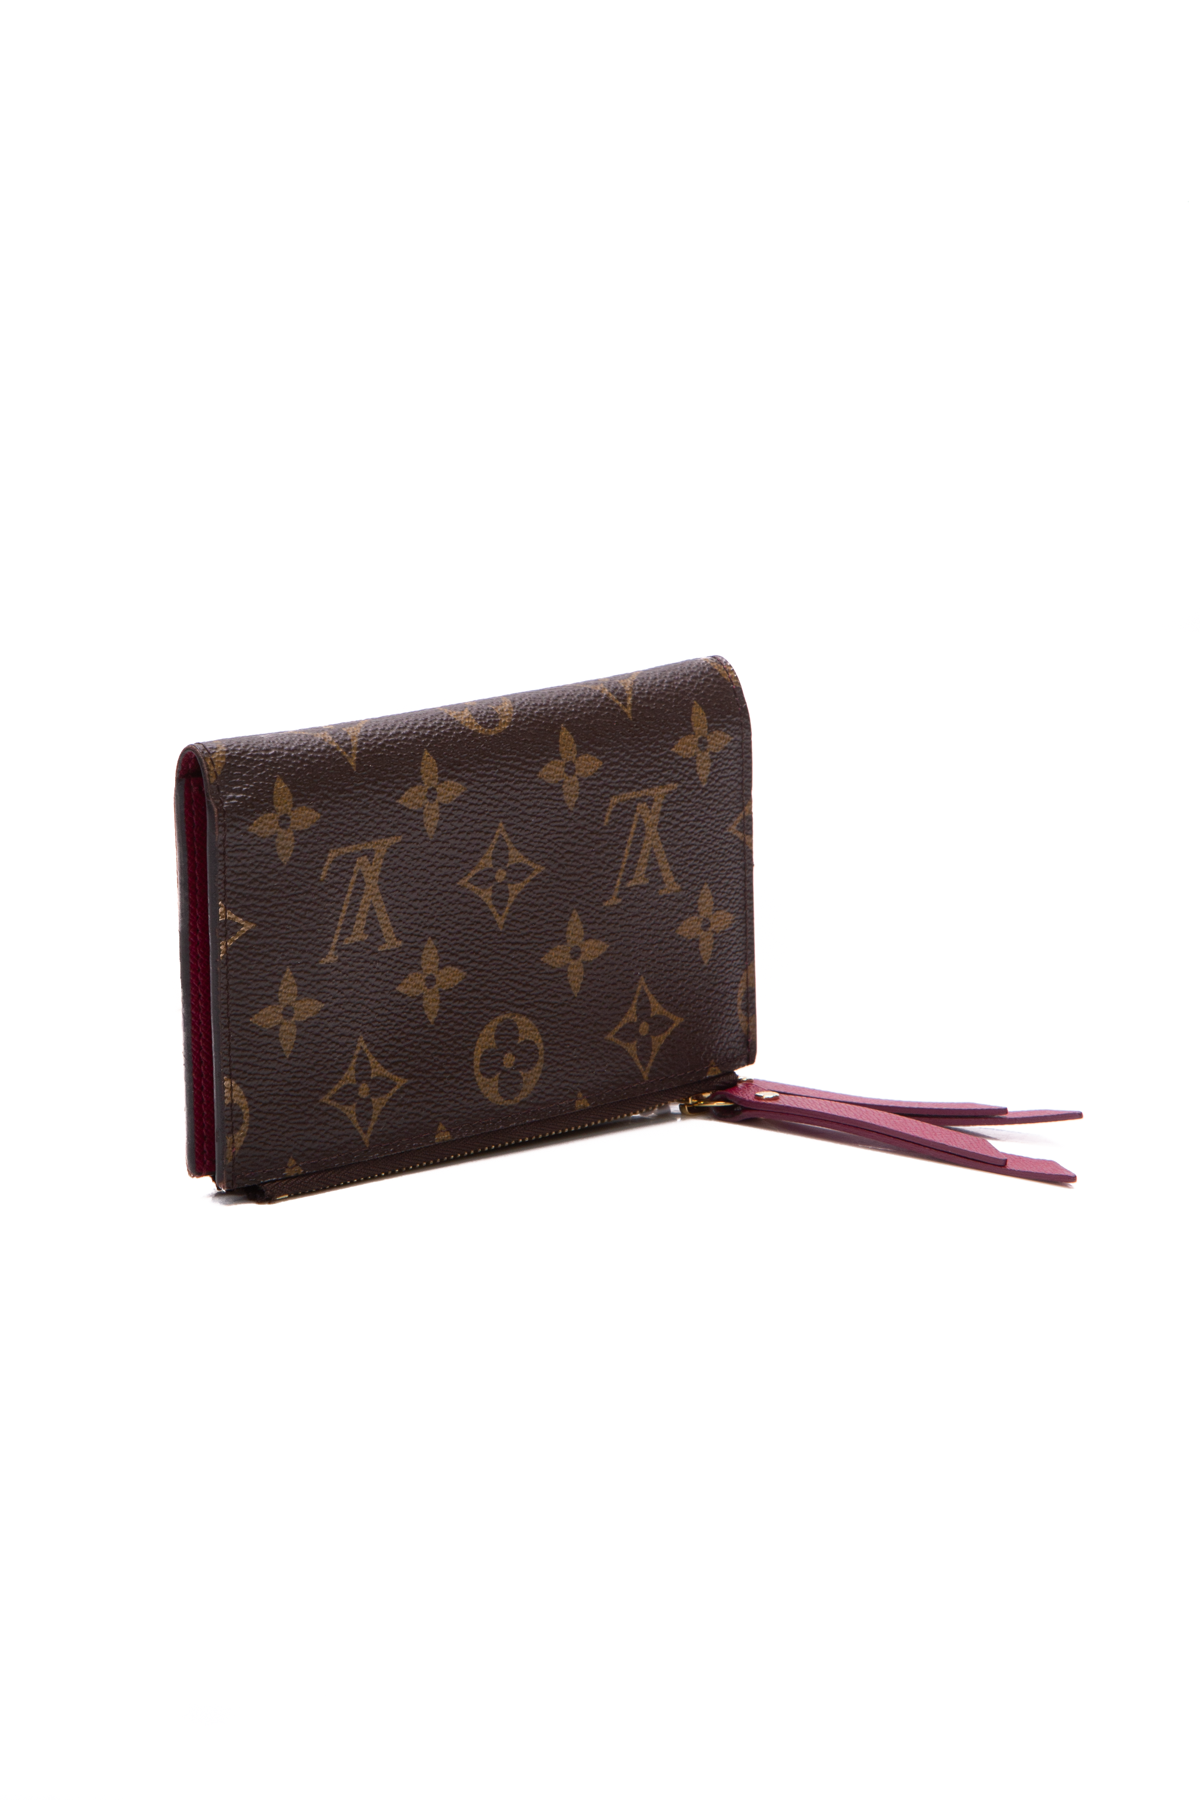 Louis Vuitton ADELE COMPACT wallet UNBOXING